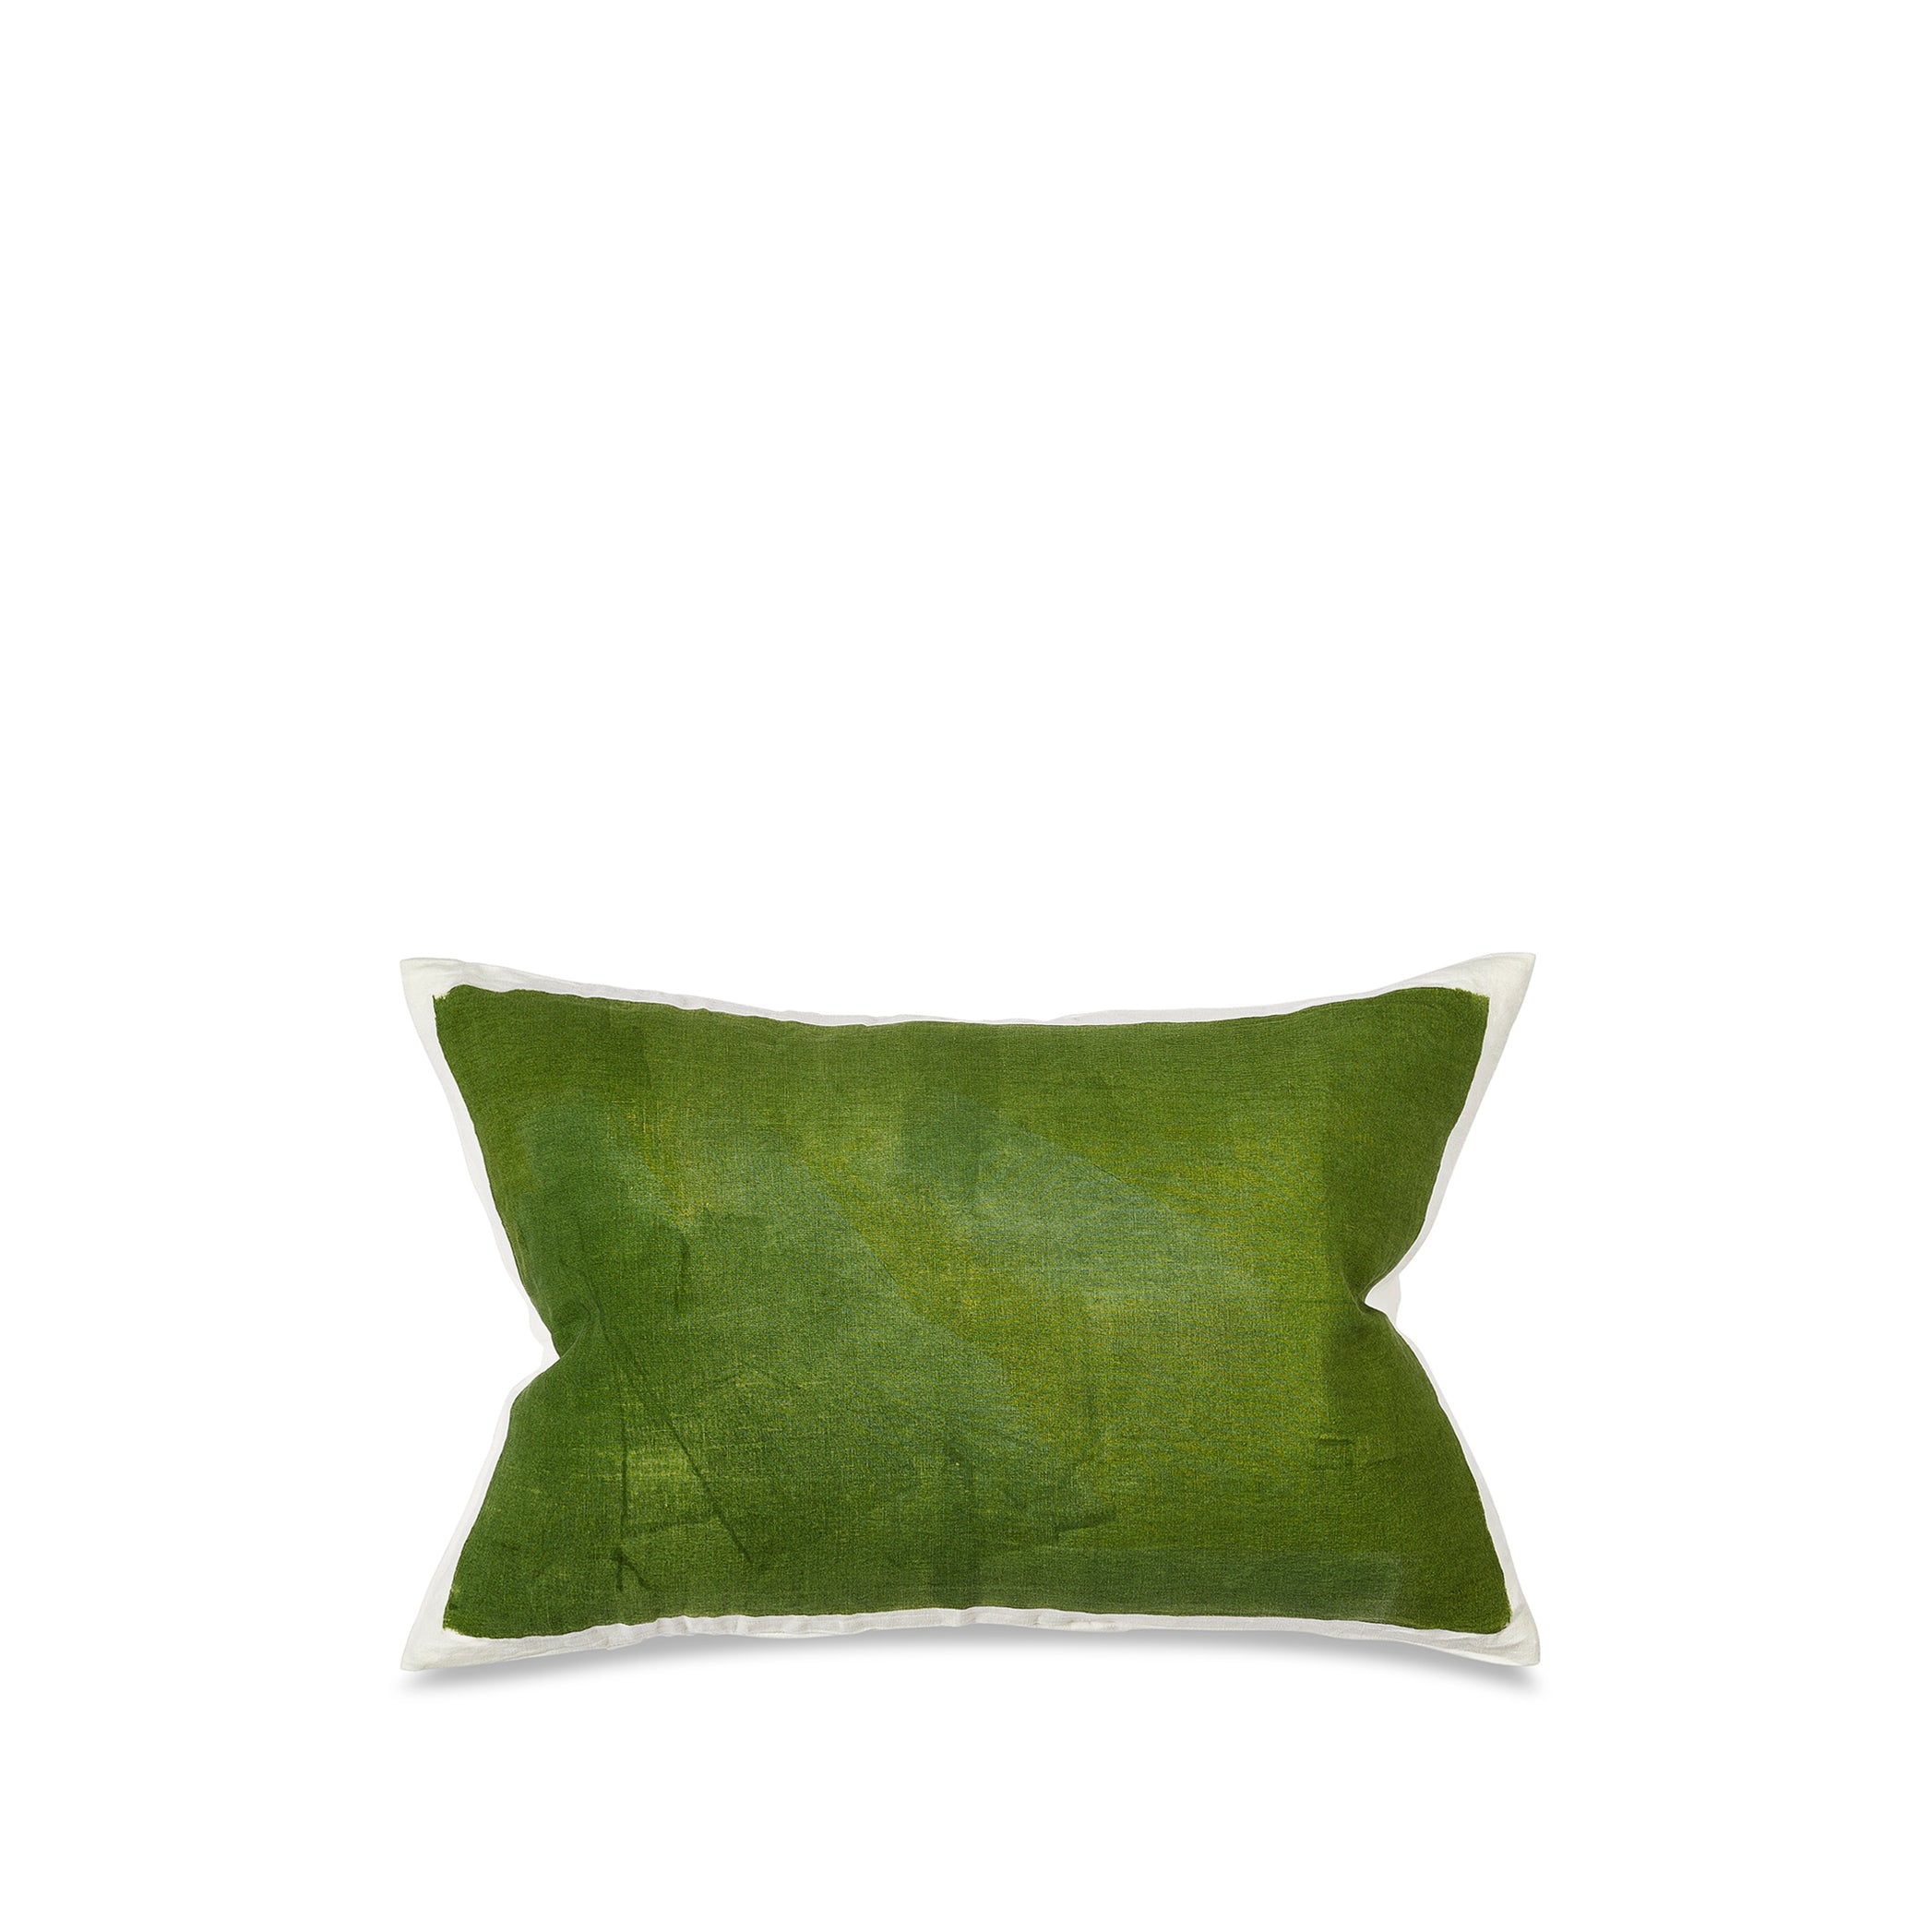 Hand Painted Linen Cushion in Avocado Green, 60cm x 40cm